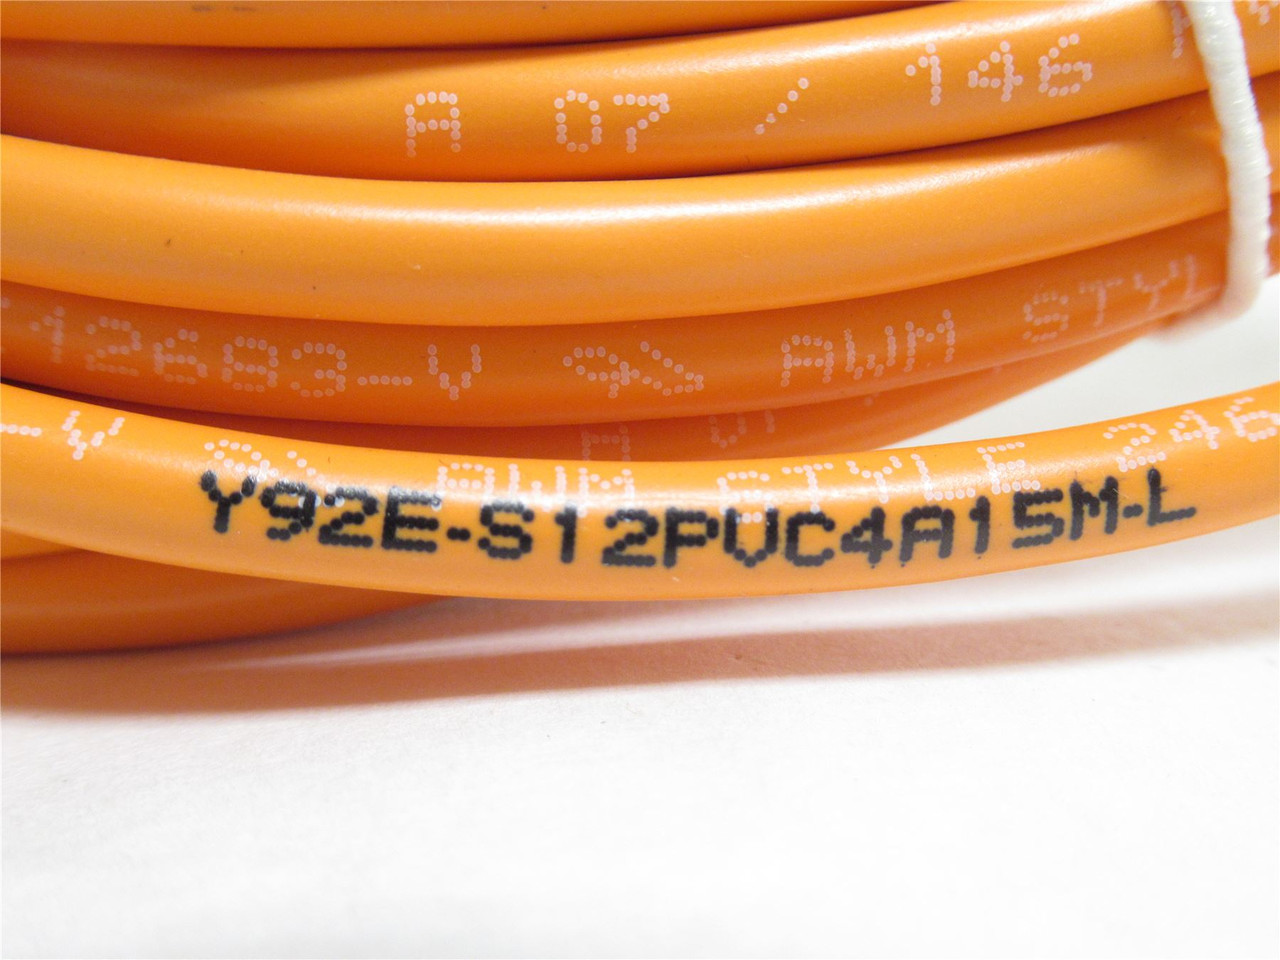 Omron Y92E-S12PVC4A15M-L; Sensor Actuator Cable; 15m; 90Deg